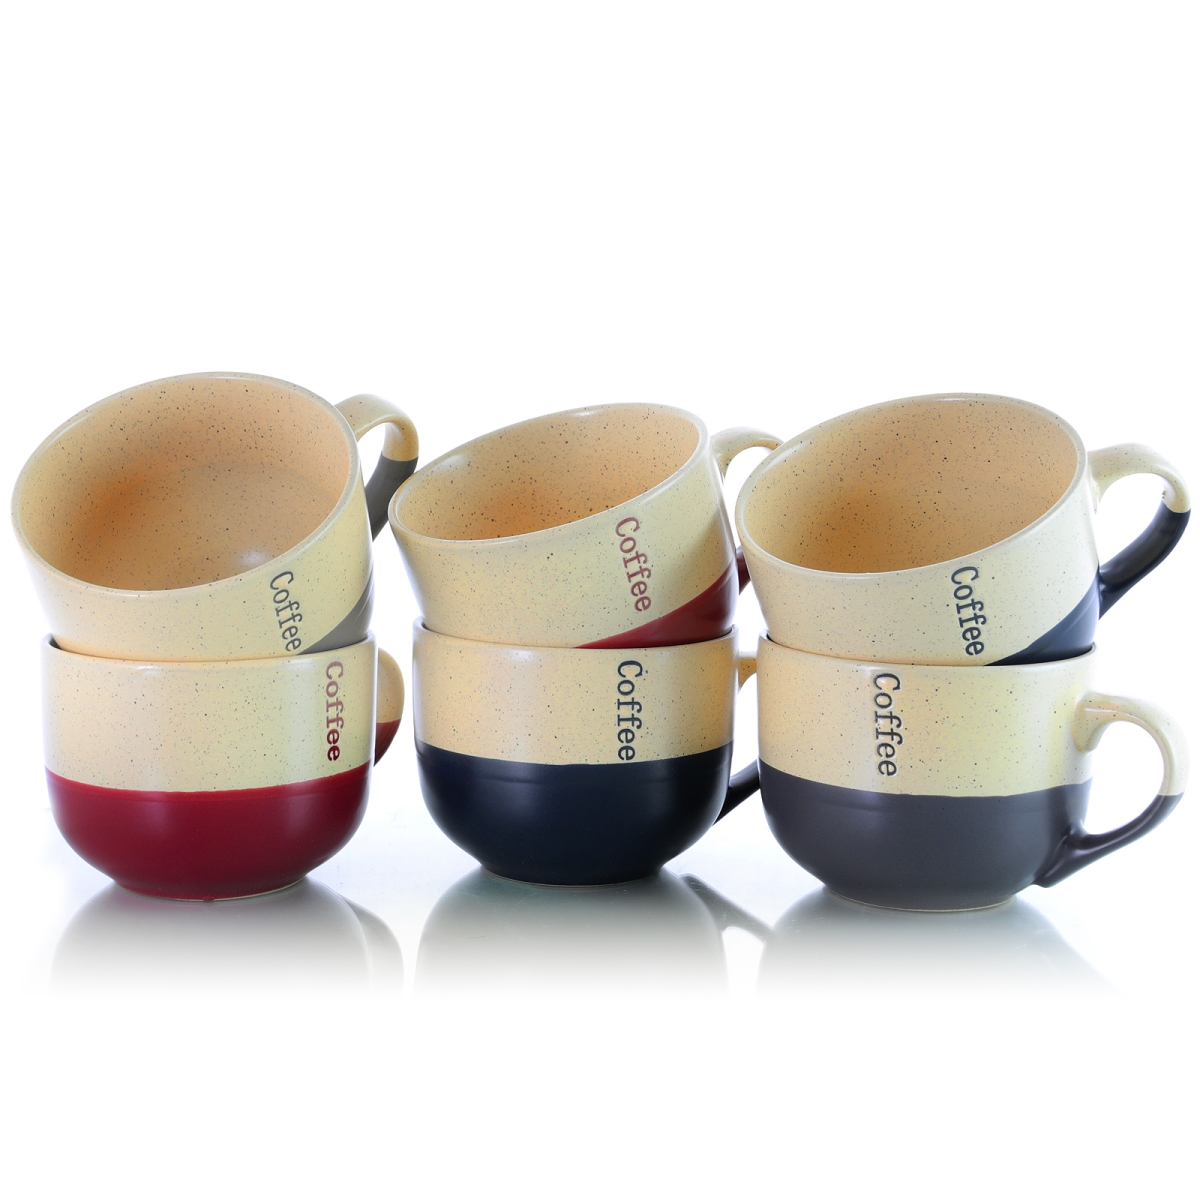 El-latteloft 18 Oz Latte Loft Mug Set - Assorted Color, 6 Piece